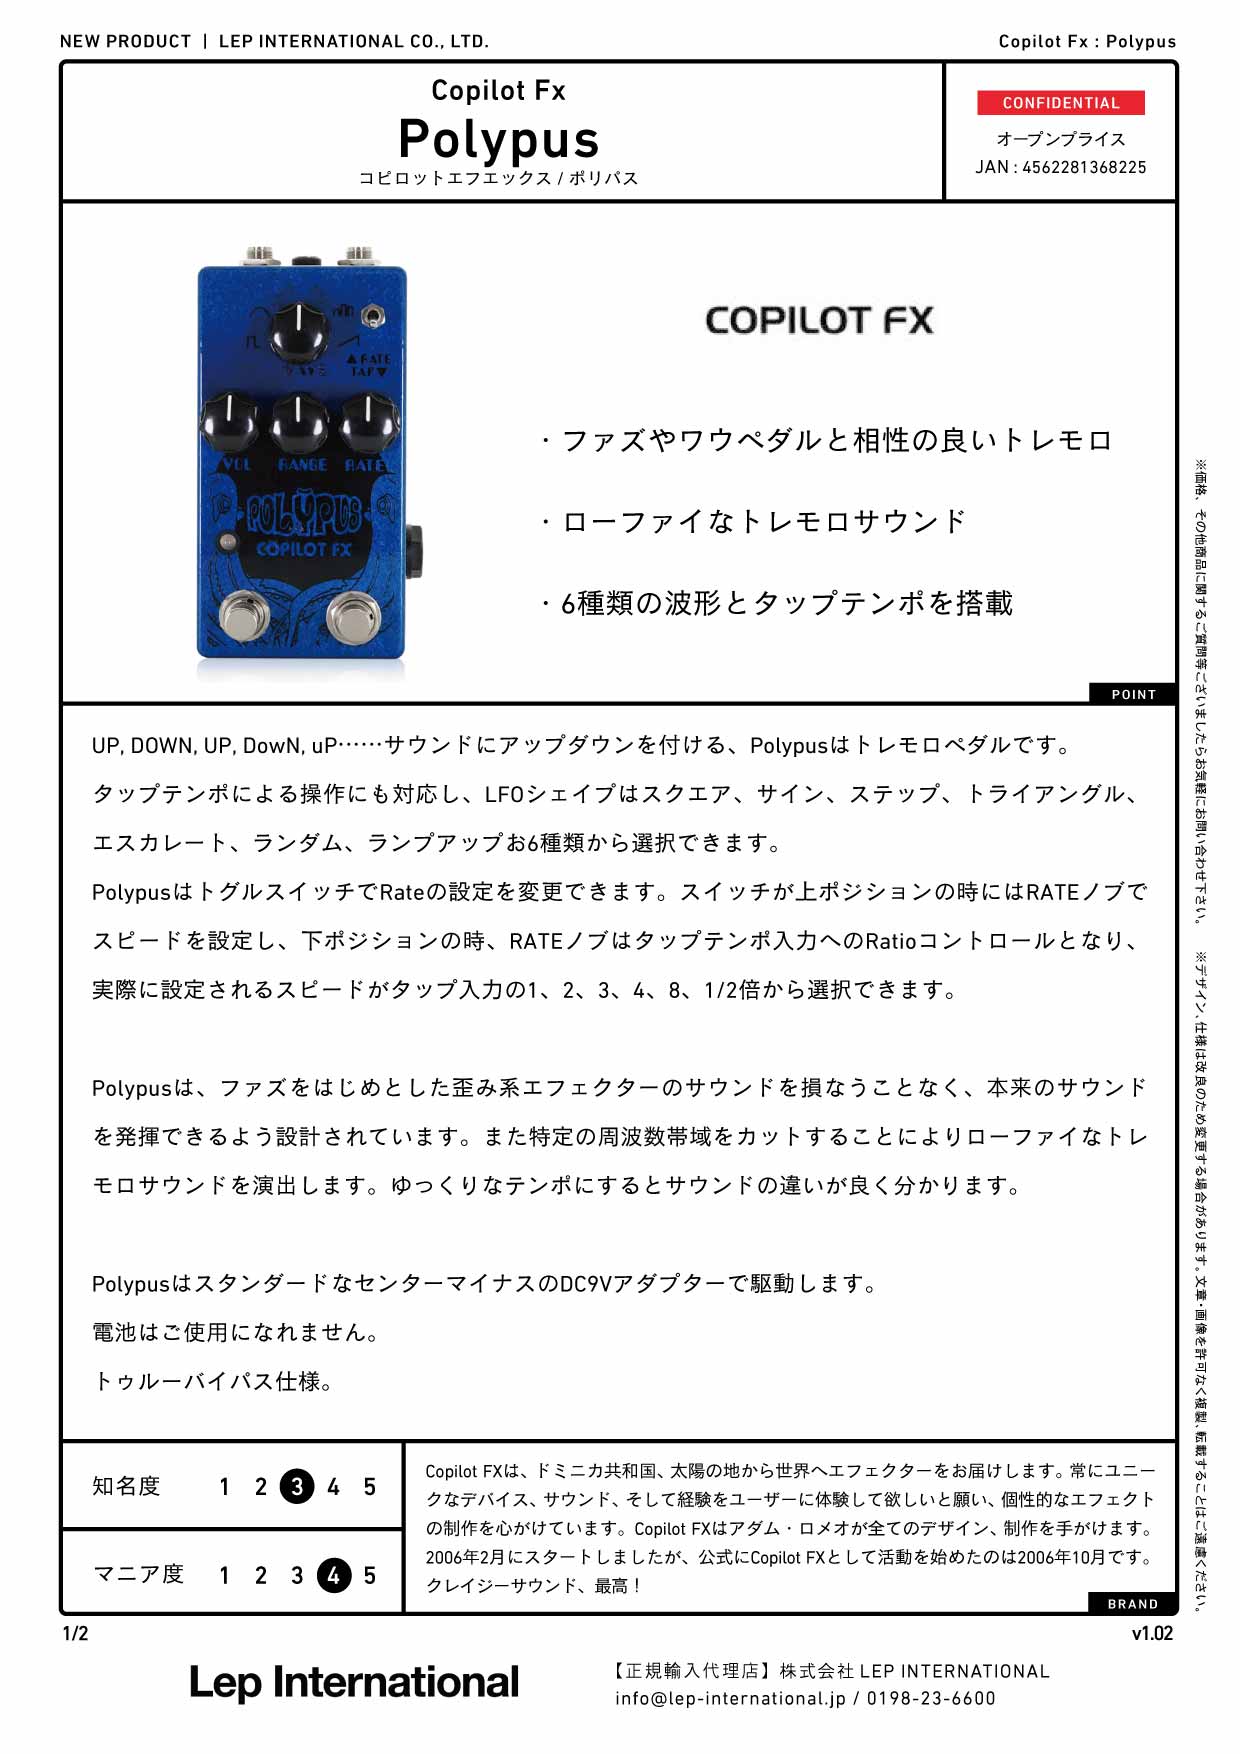 Copilot FX/Polypus